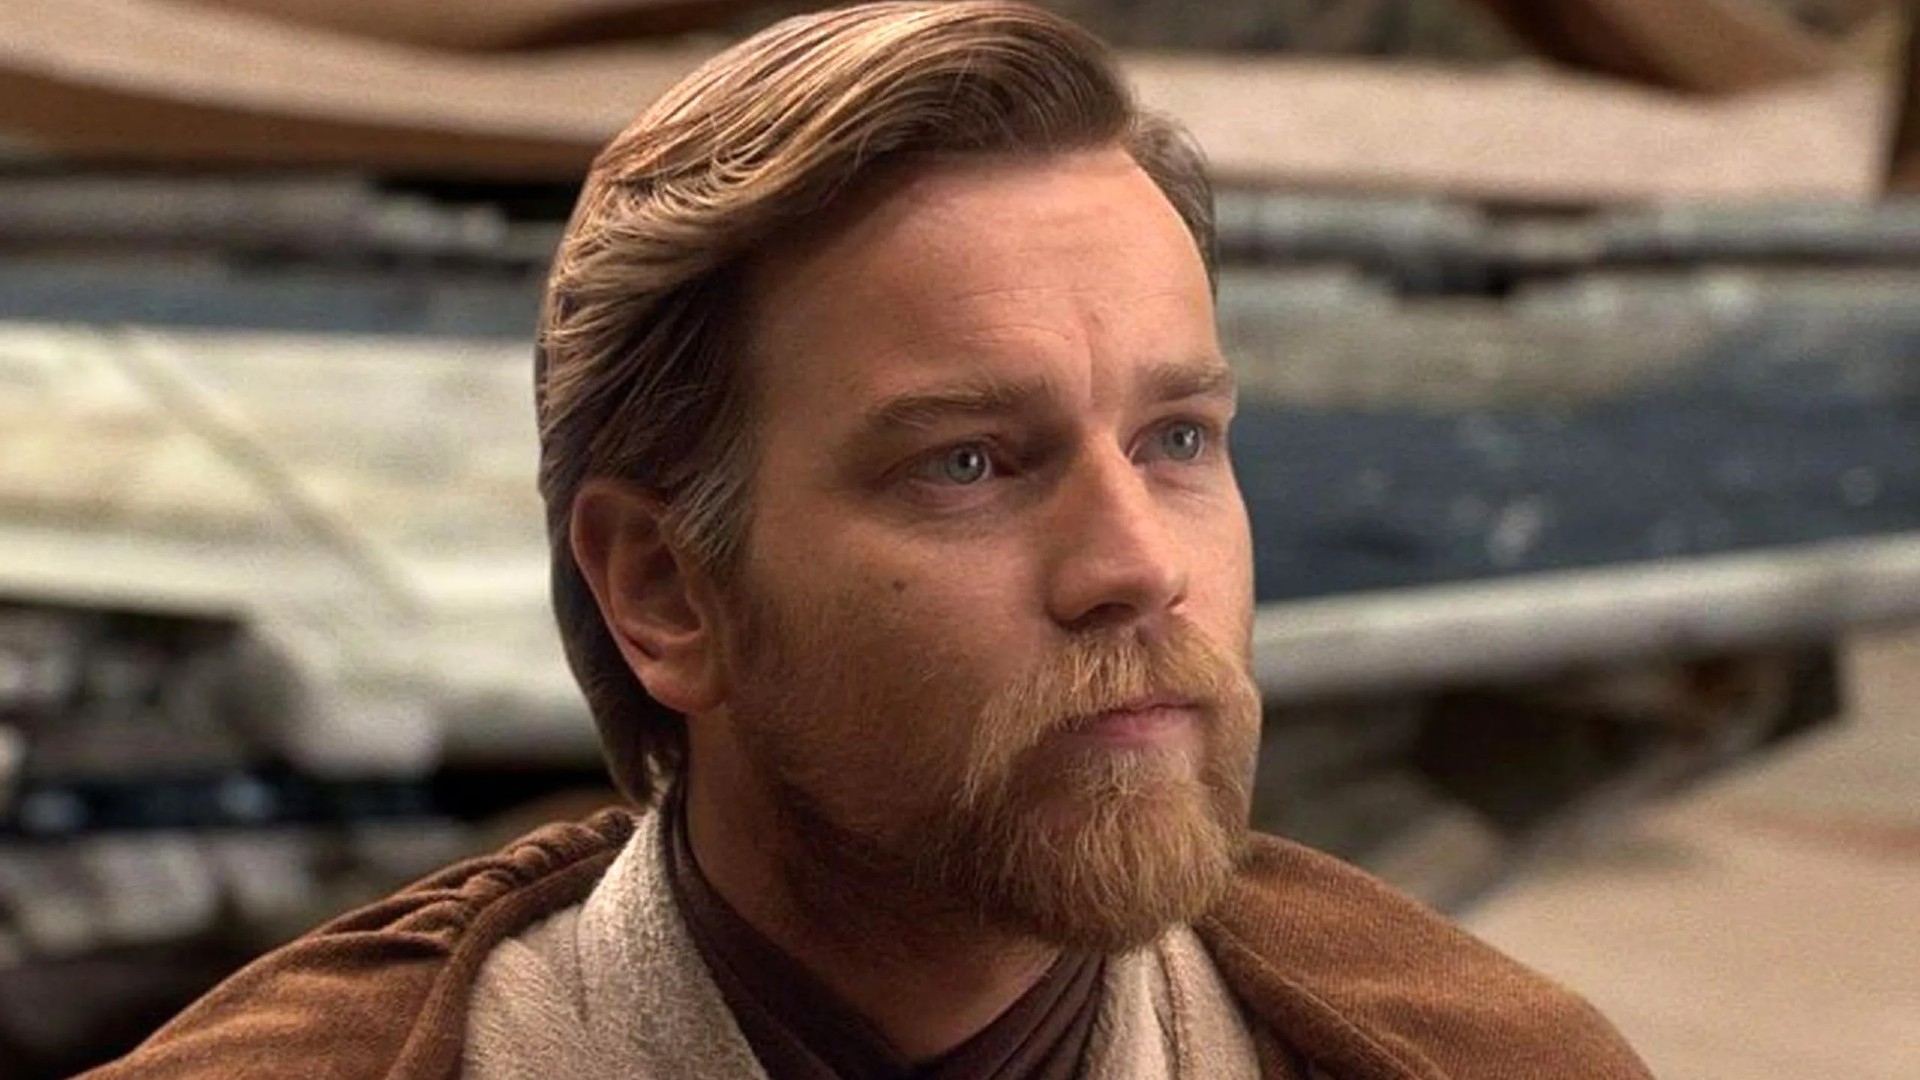 Ewan McGregor open to another Obi-Wan Kenobi return: “I’d be totally up for that”